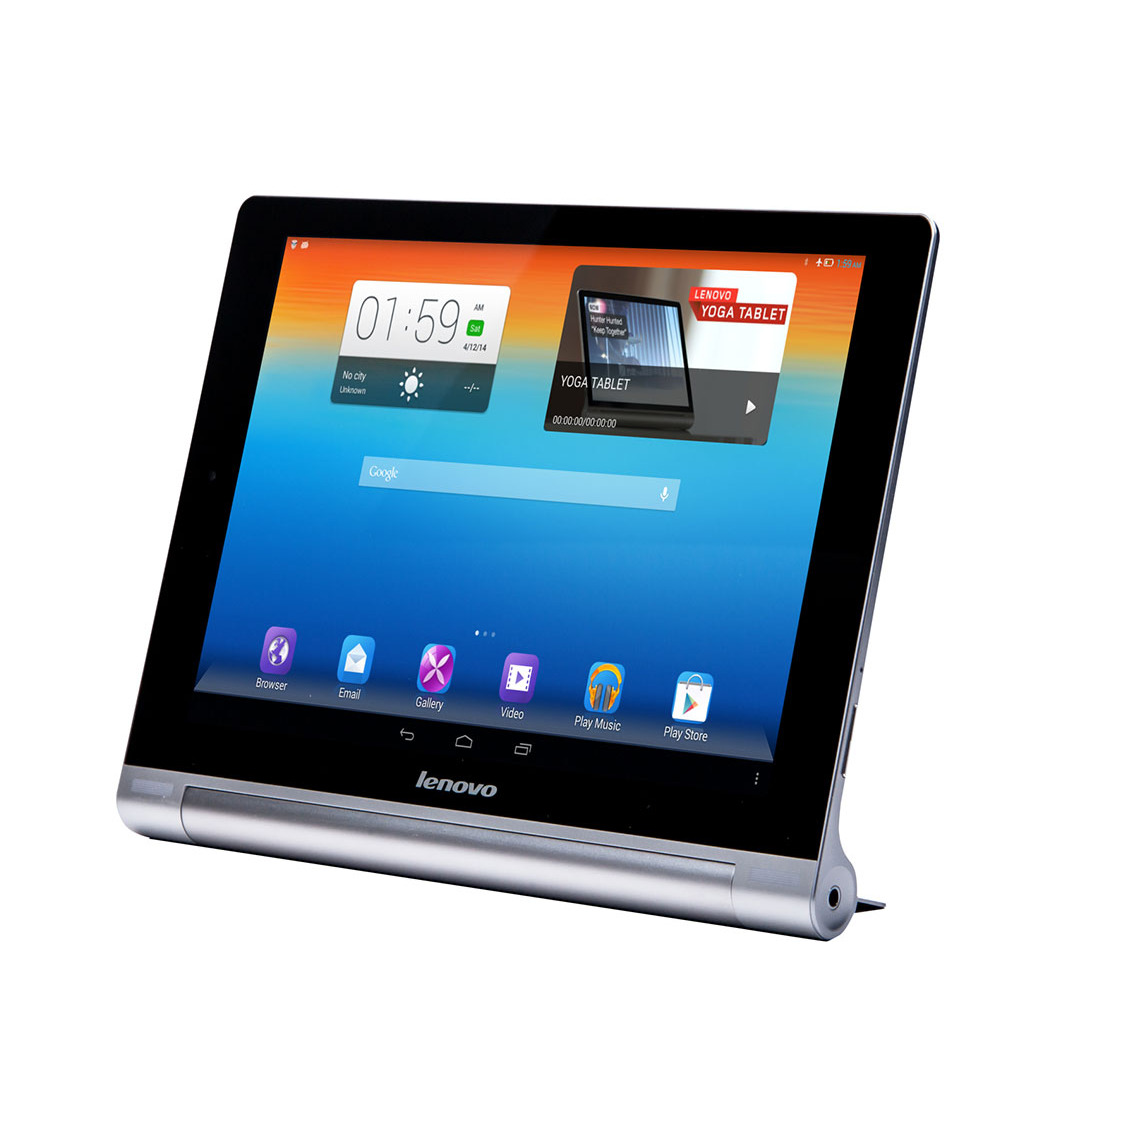 Máy tính bảng Lenovo Yoga Tablet 10 B8000 - 16GB, Wifi + 3G, 10 inch